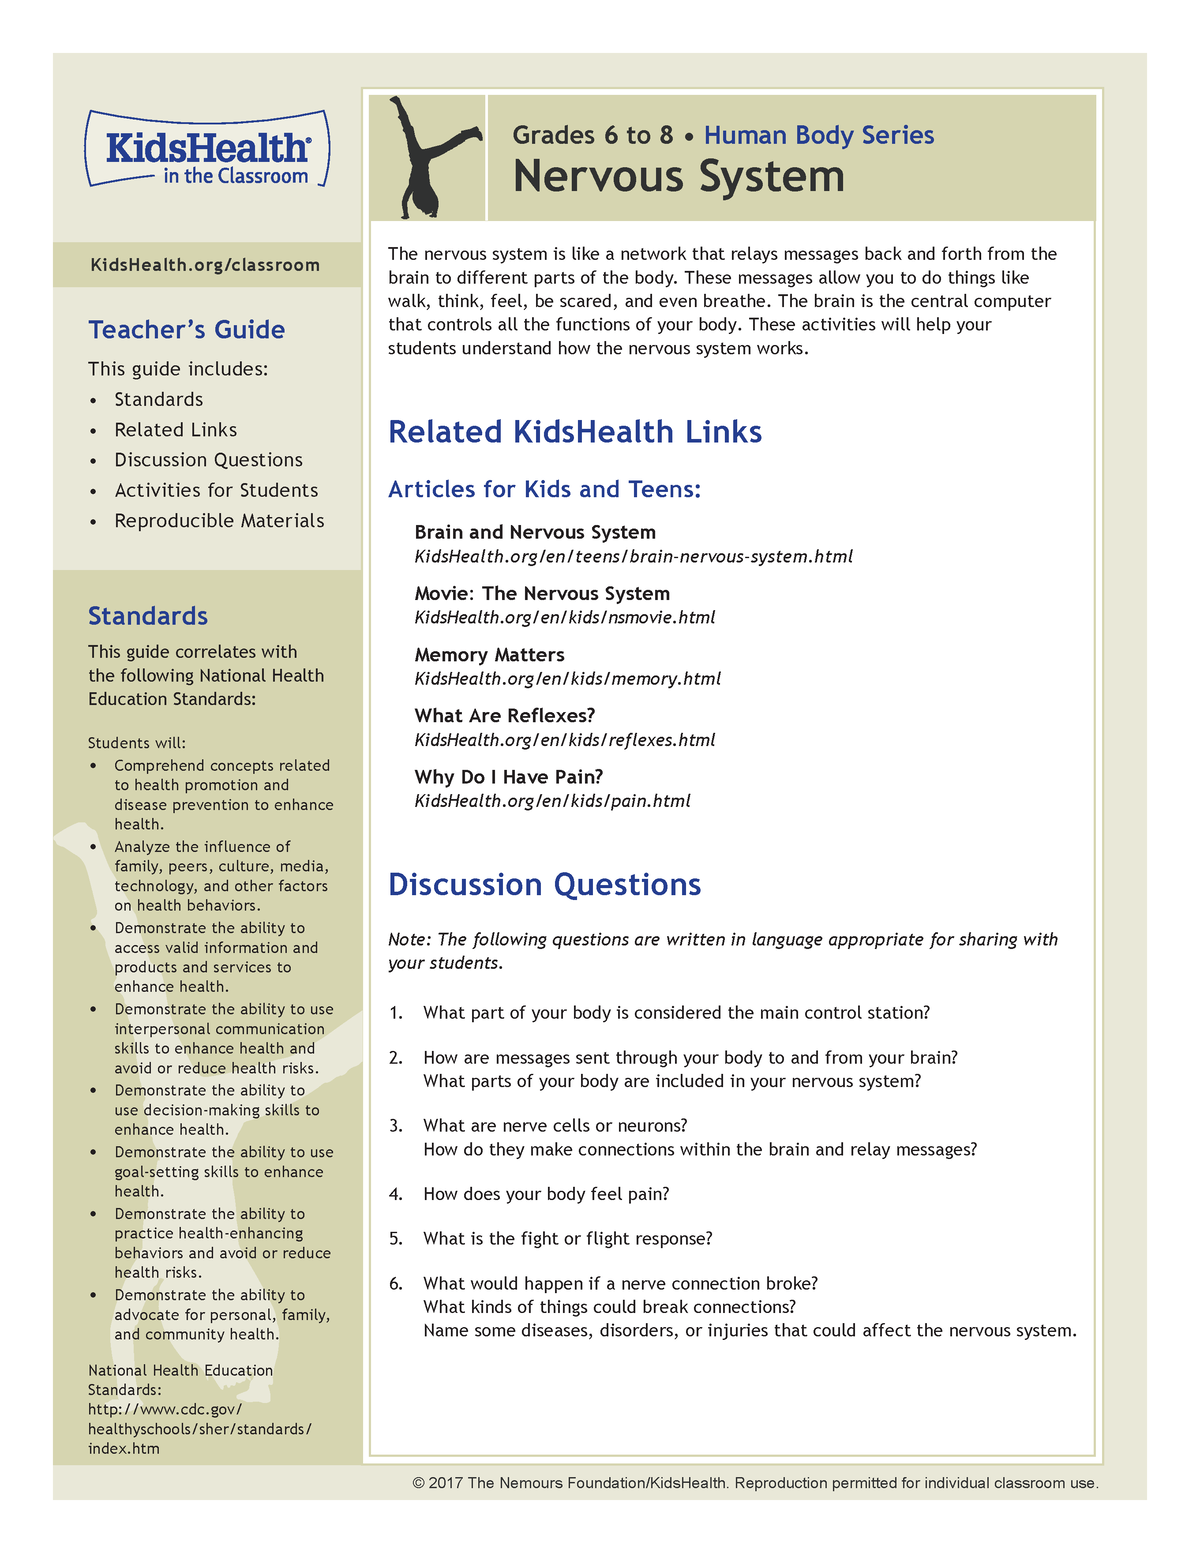 nervous-system-activities-kidshealth-classroom-grades-6-to-8-human